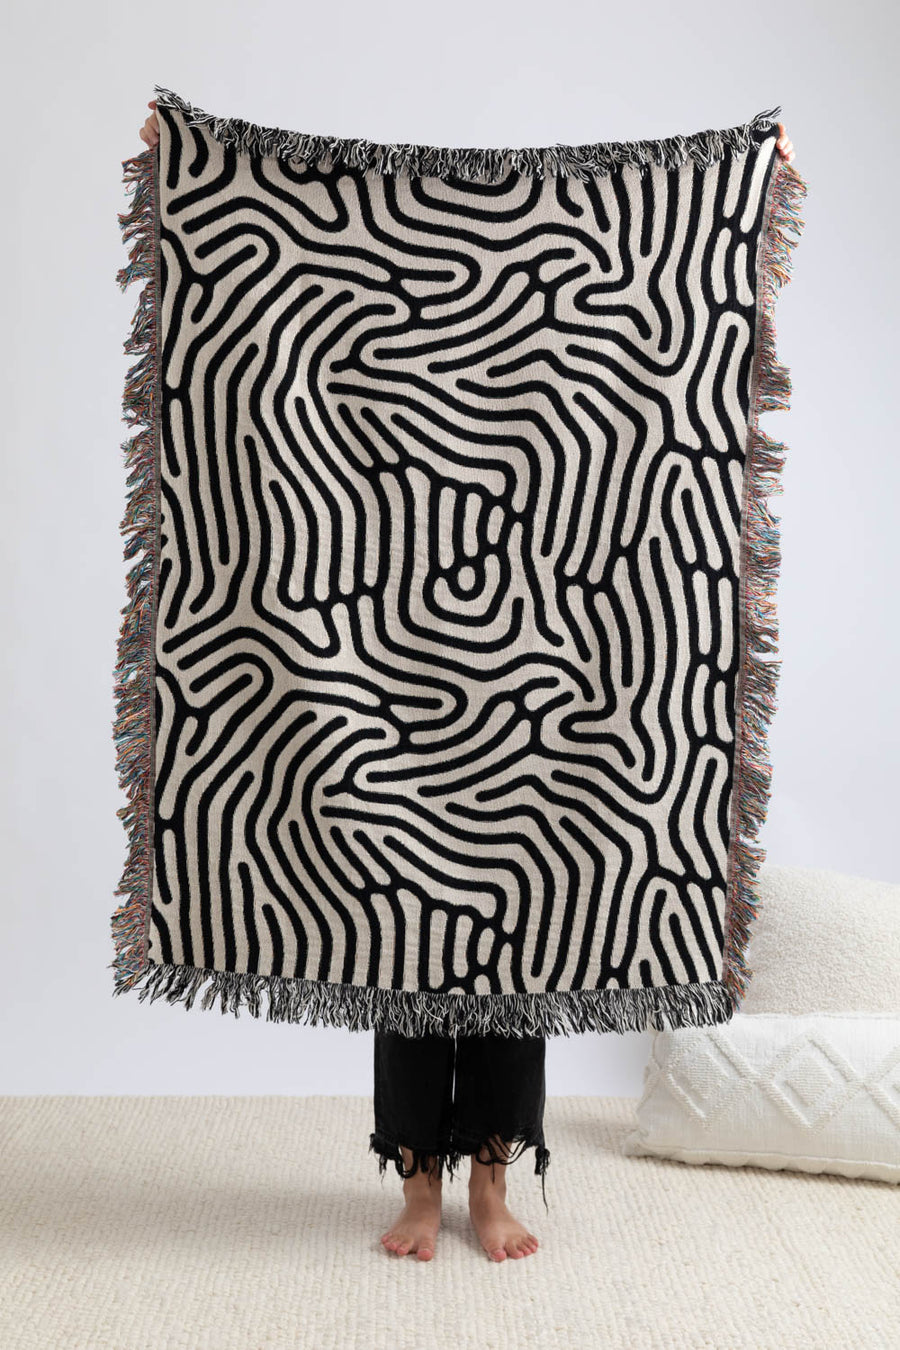 Abstract Modern Art Throw Blanket 37x52